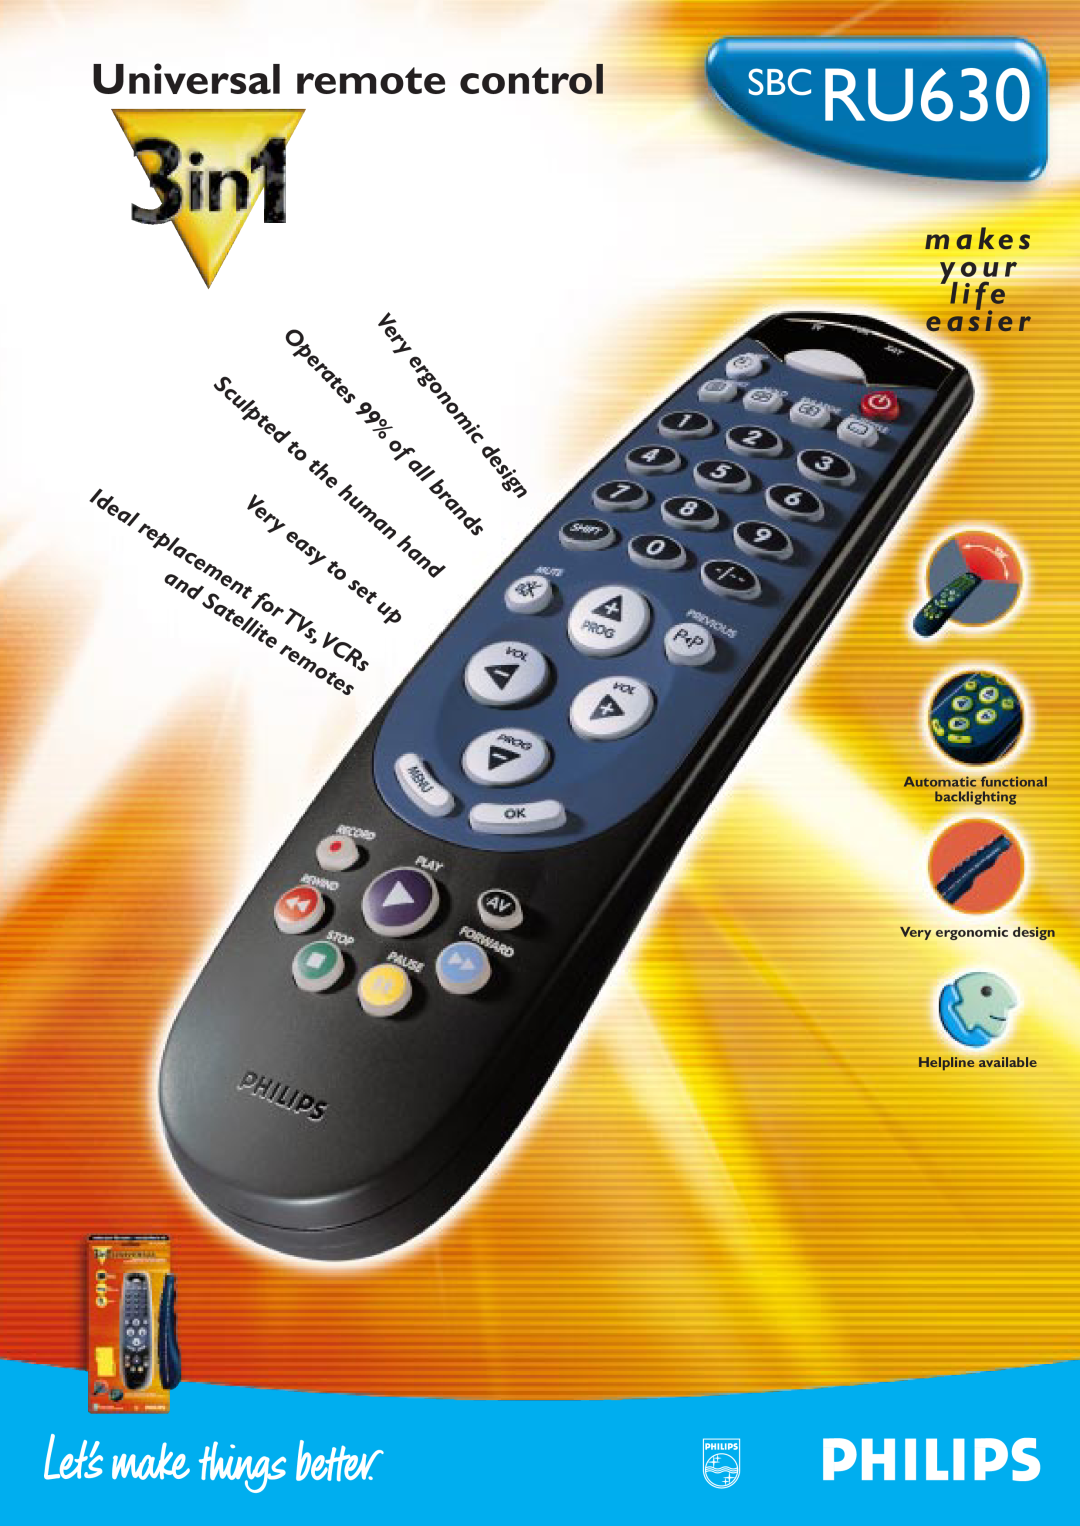 Philips SBC RU630 manual Universal remote control, brands, m a k e s y o u r l i f e e a s i e r, ergonomic, Very, design 